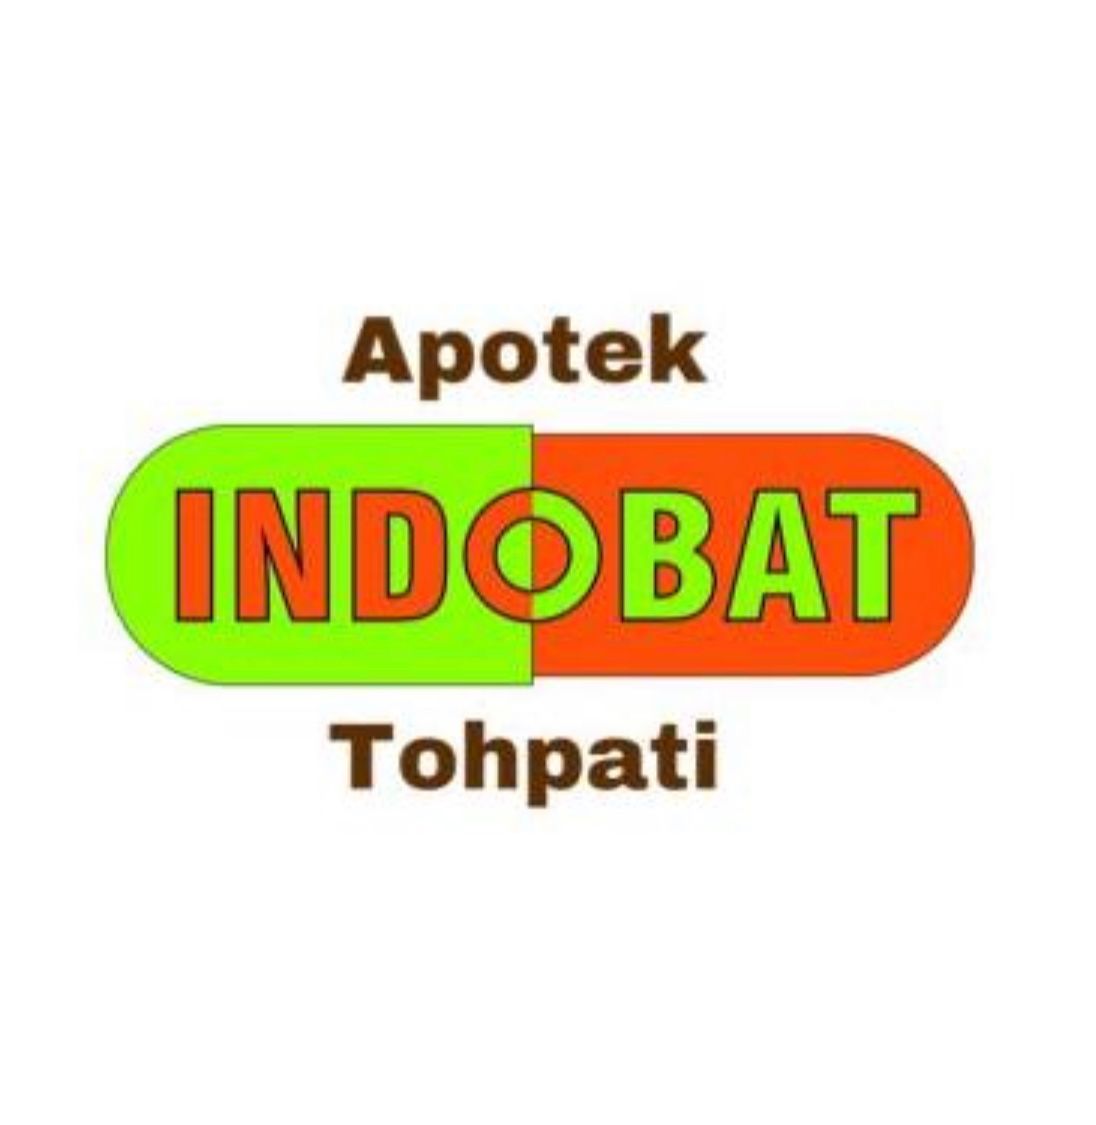 Apotek Indobat Tohpati